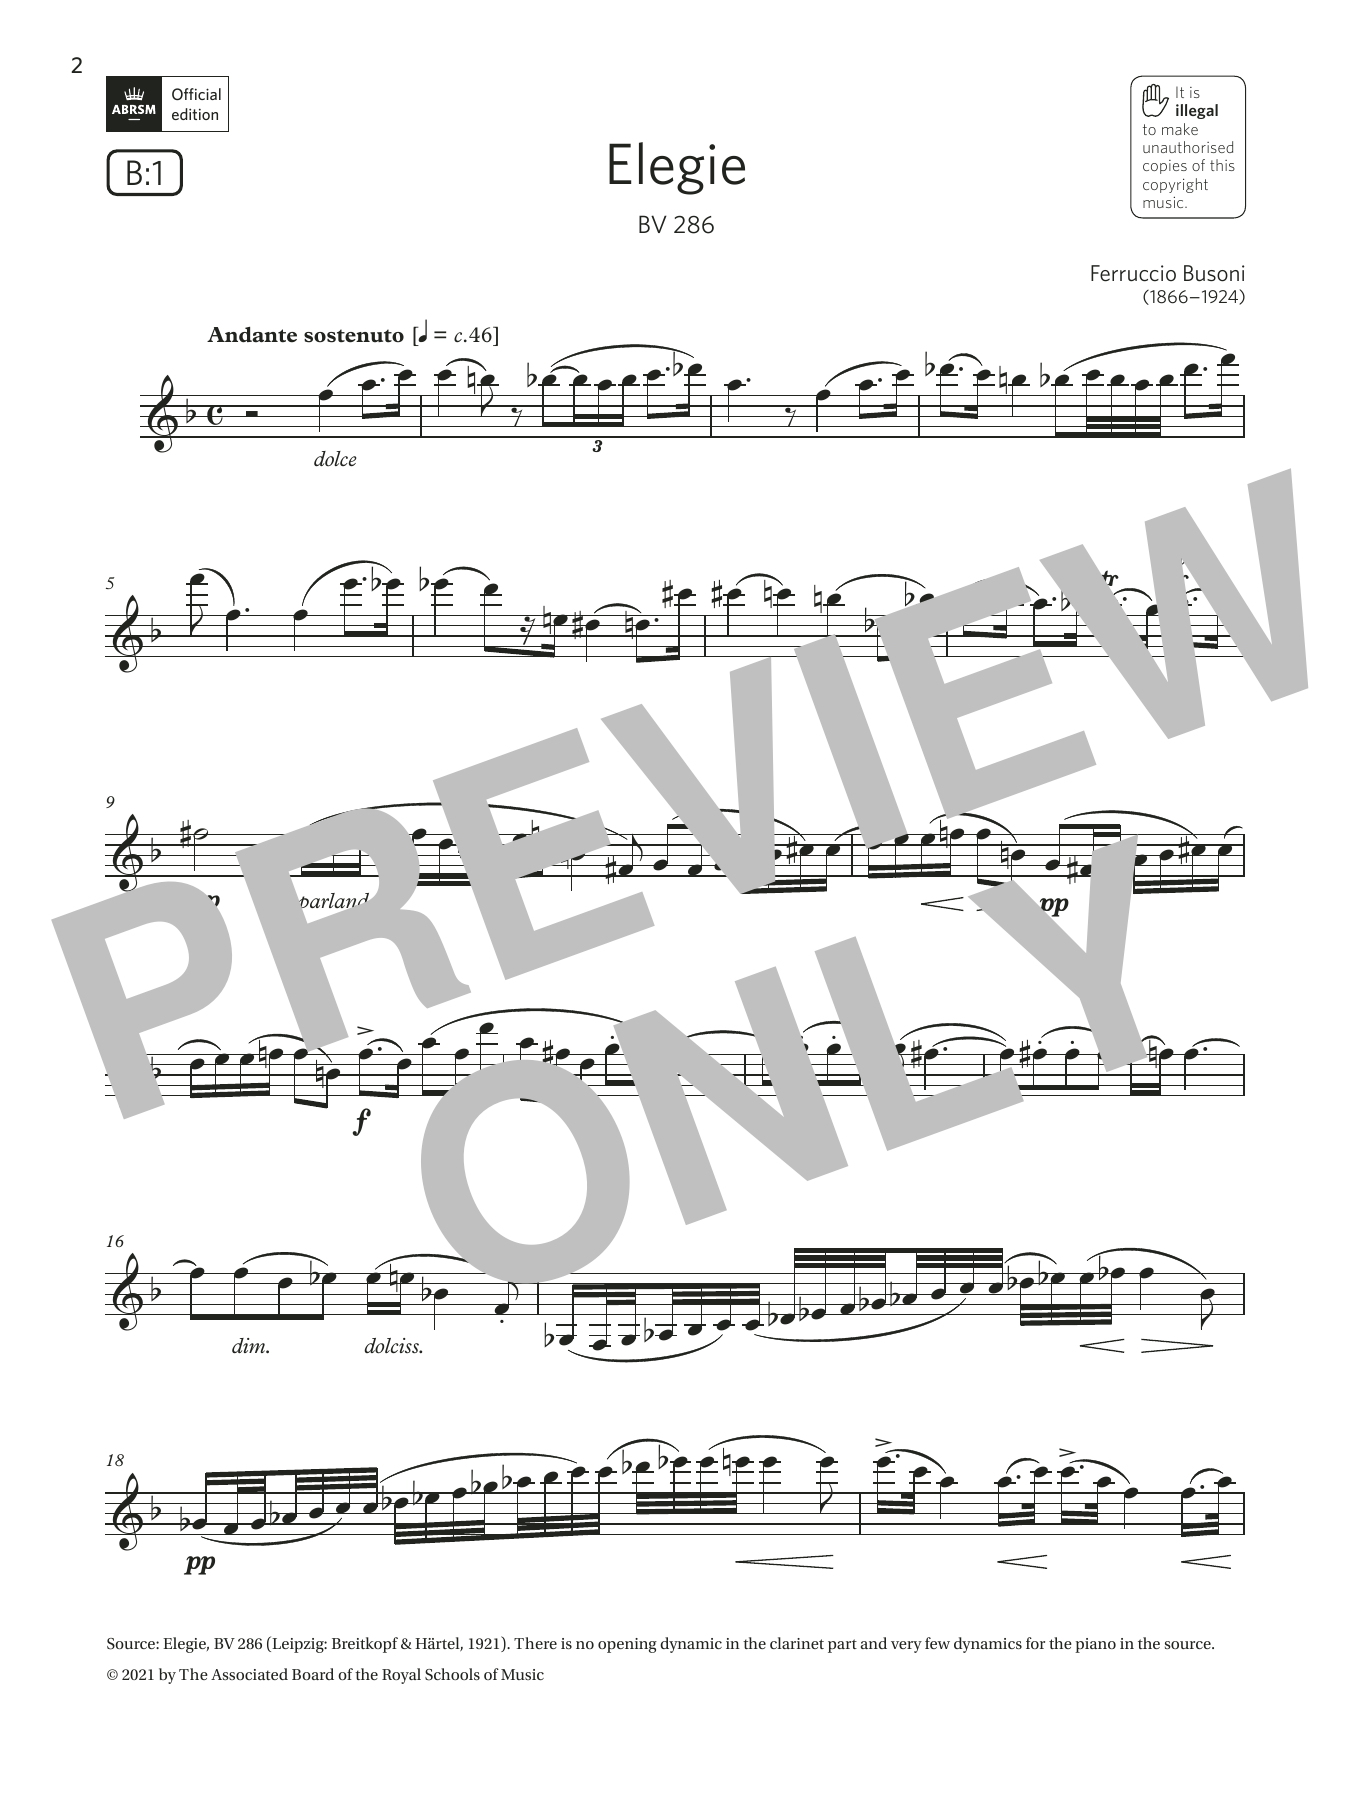 Ferruccio Busoni Elegie, BV 286 (Grade 7 List B1 from the ABRSM Clarinet syllabus from 2022) Sheet Music Notes & Chords for Clarinet Solo - Download or Print PDF